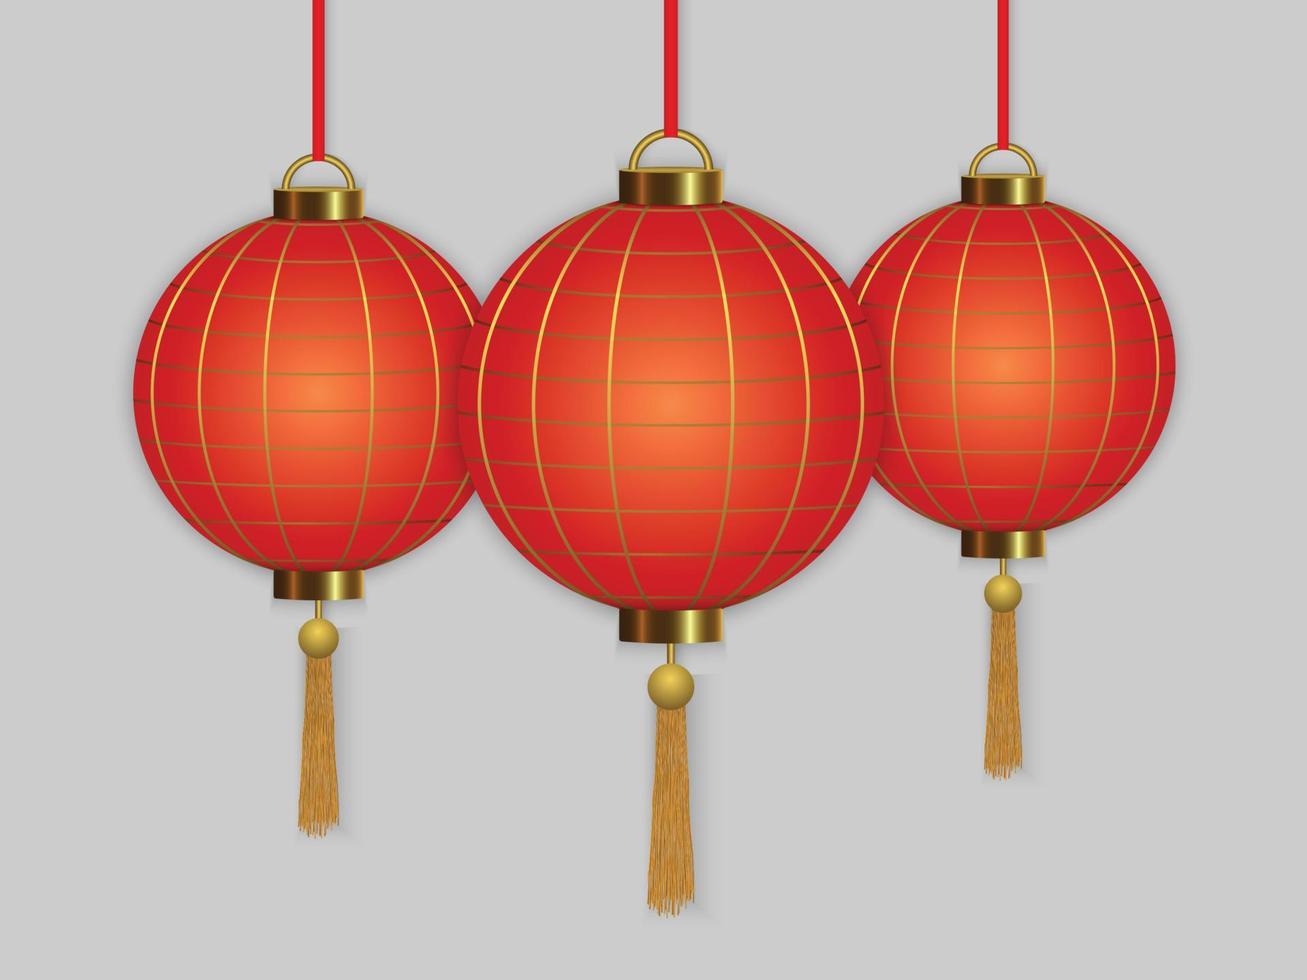 Chinese hangende rode lantaarns vector